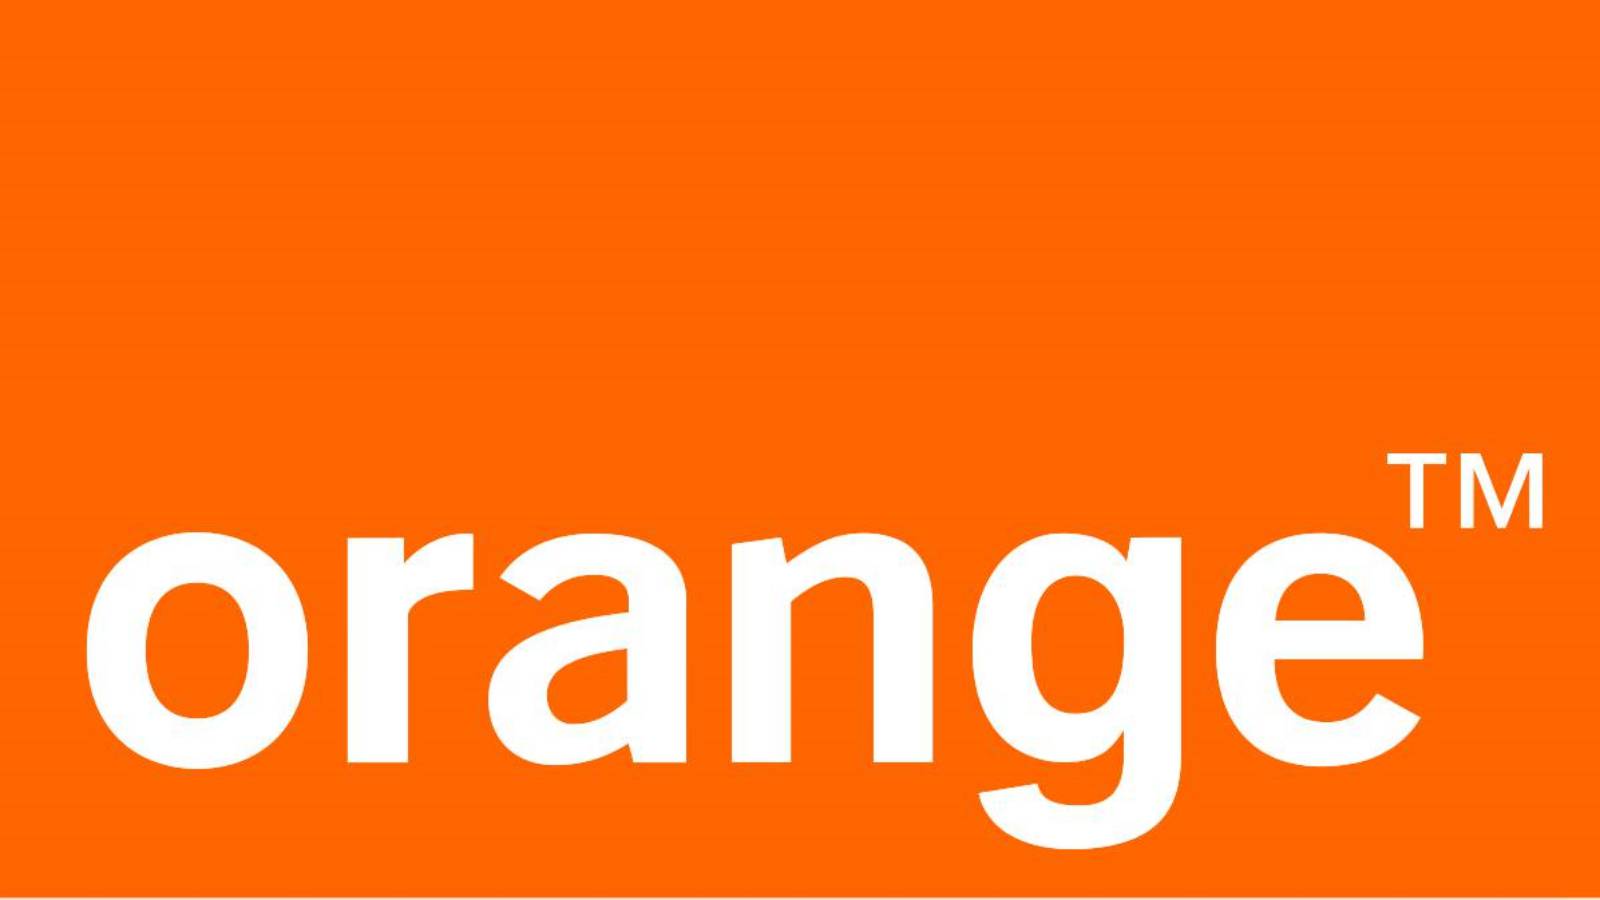 Prolonged orange